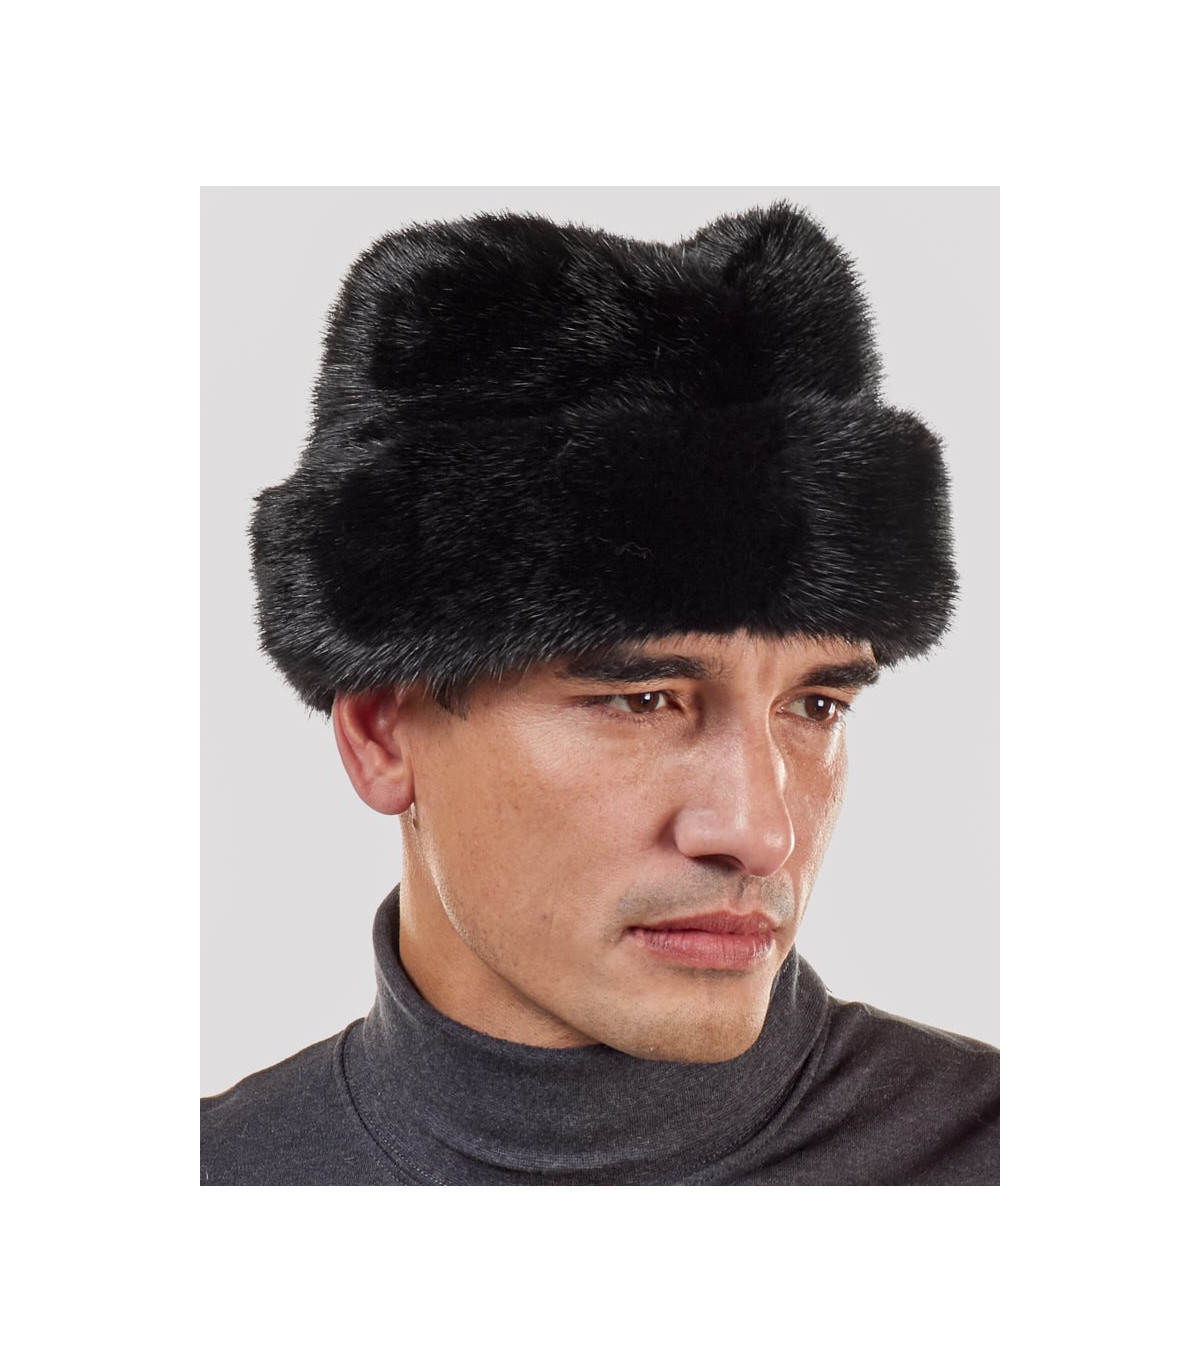 https://www.furhatworld.com/760-superlarge_default/mink-fur-russian-cossack-hat-black.jpg